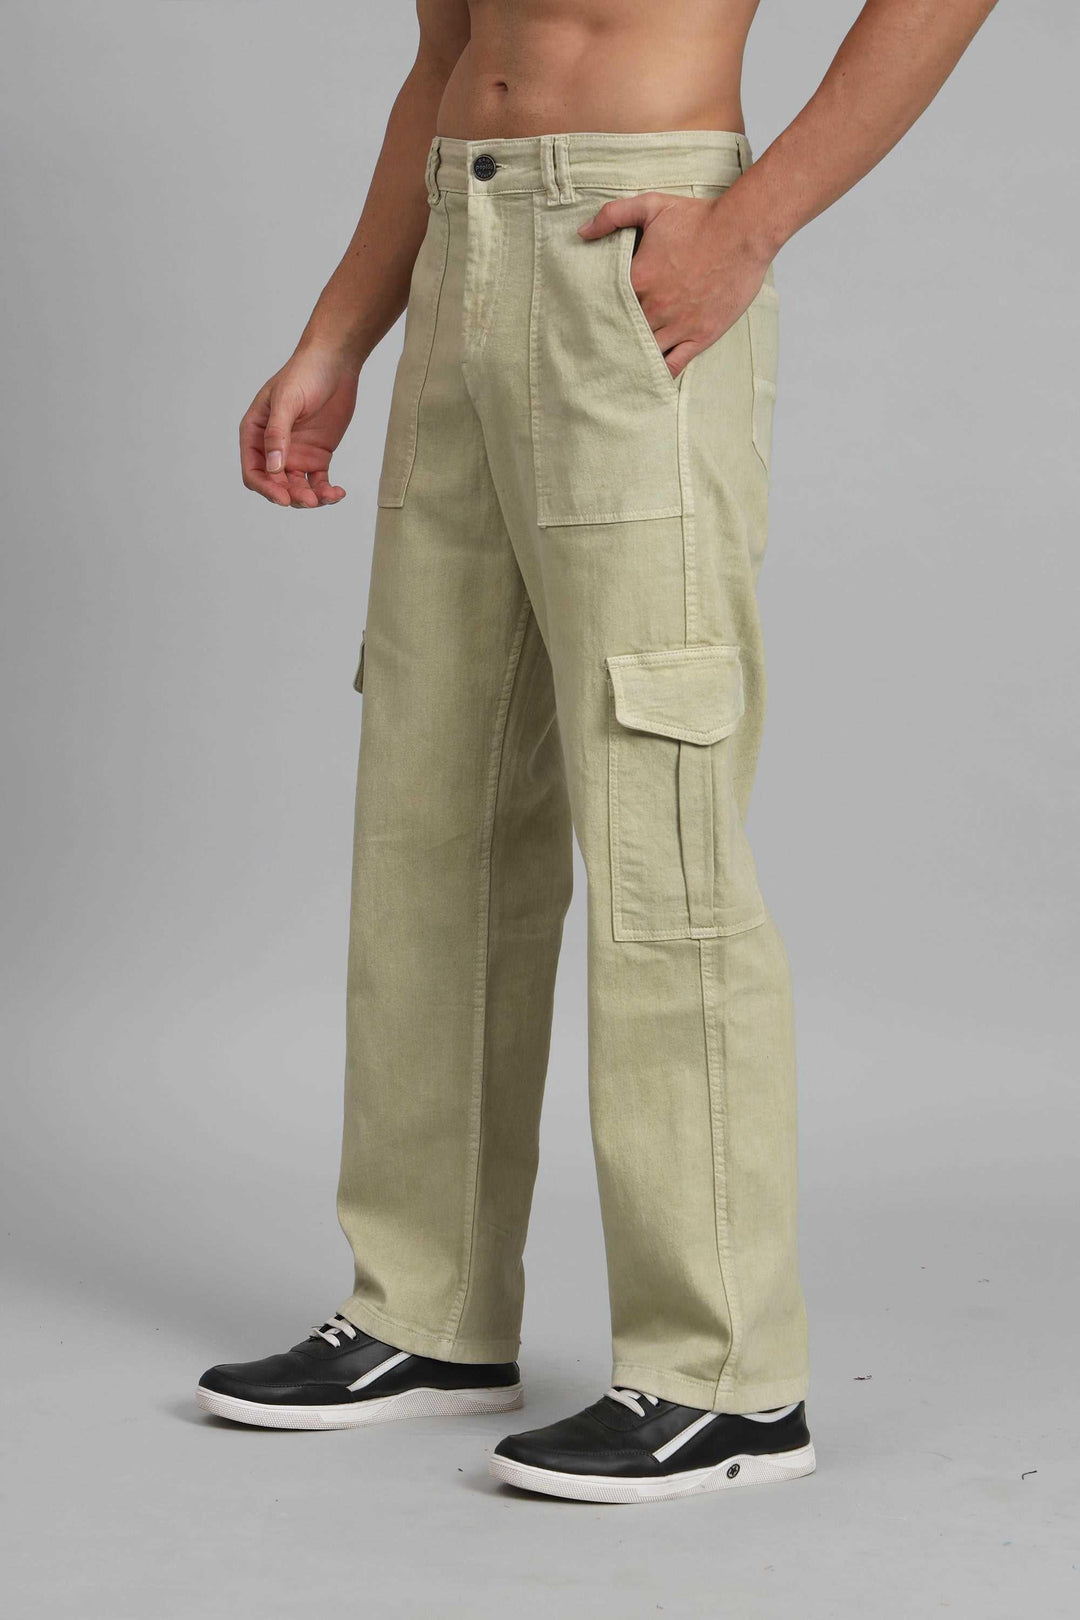 Men's Loose Fit Multiple Pocket Grey Denim Cargo Pant - Peplos